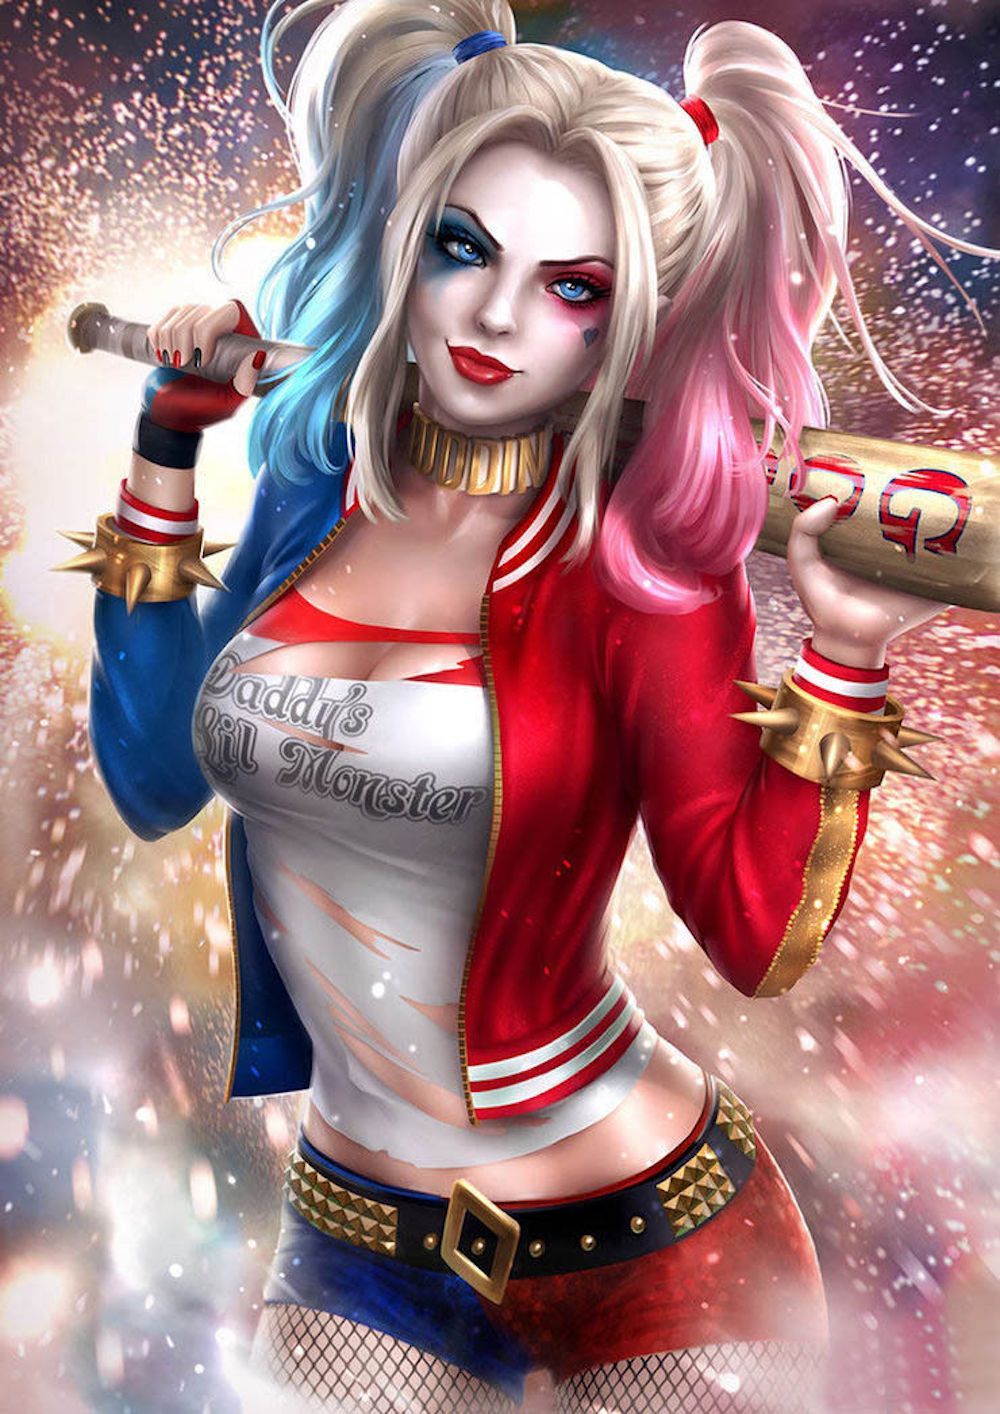 5 Super griezelige Harley Quinn Fan Art-foto's (& 5 totaal verbluffende)